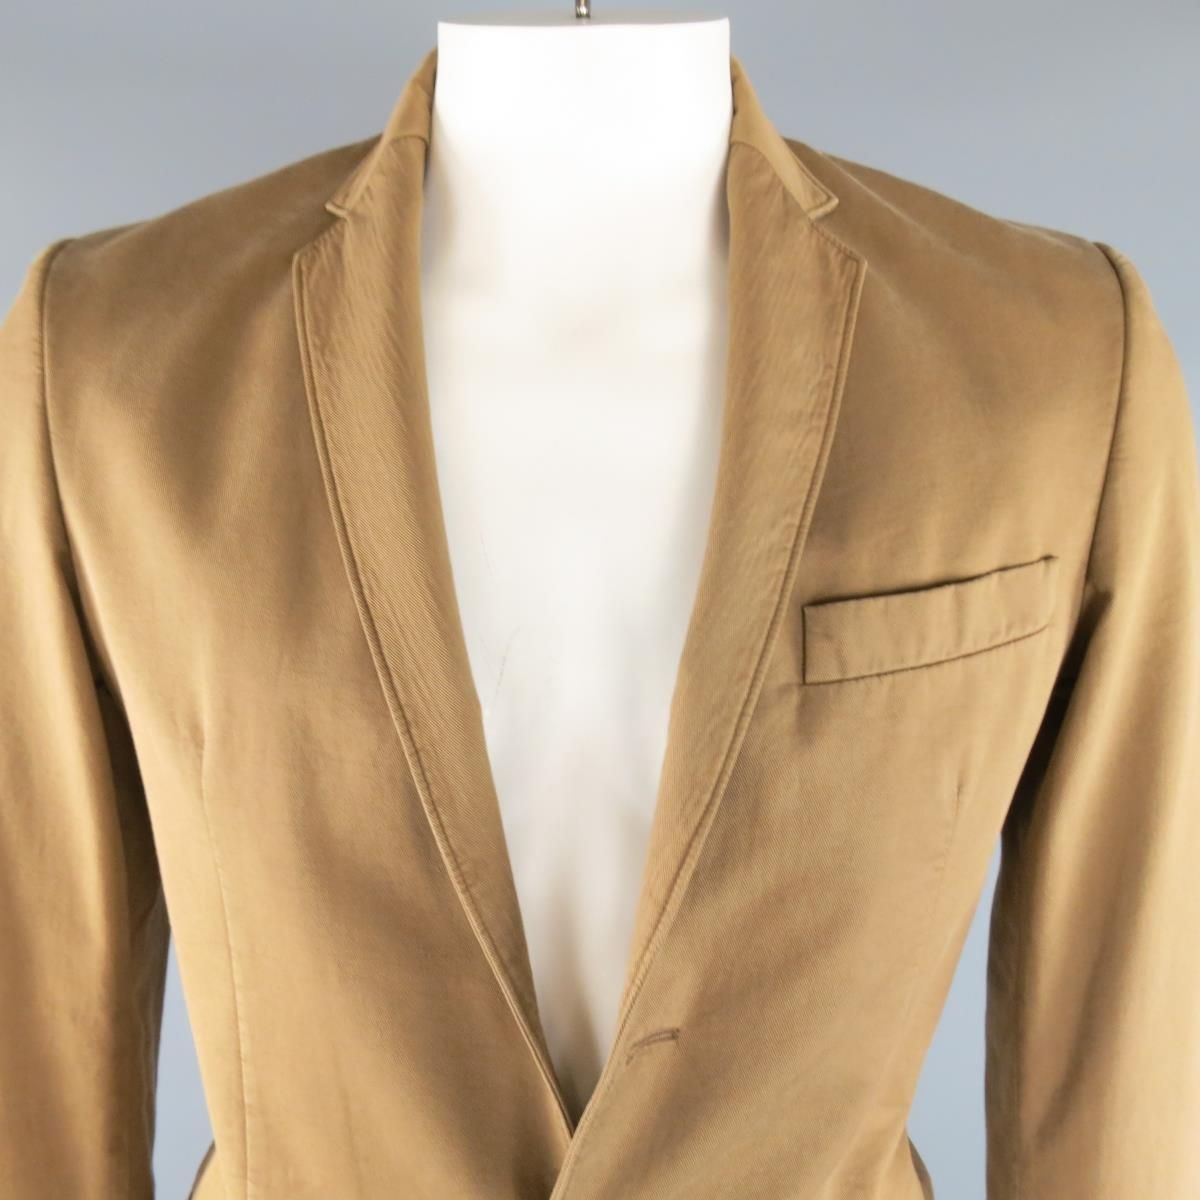 MAISON MARTIN MARGIELA 38 Tan Brown Cotton Chino Casual Suit